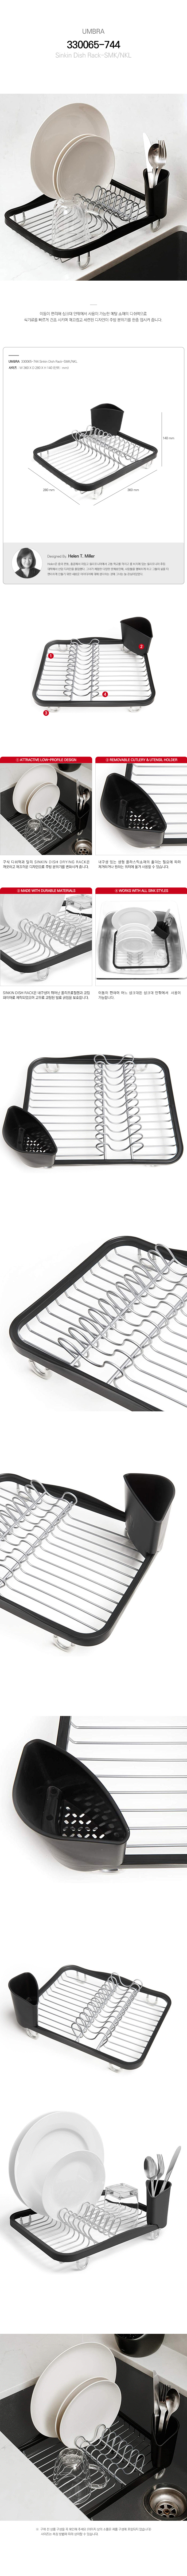 Sinkin Dish drying rack - Umbra 330065-718